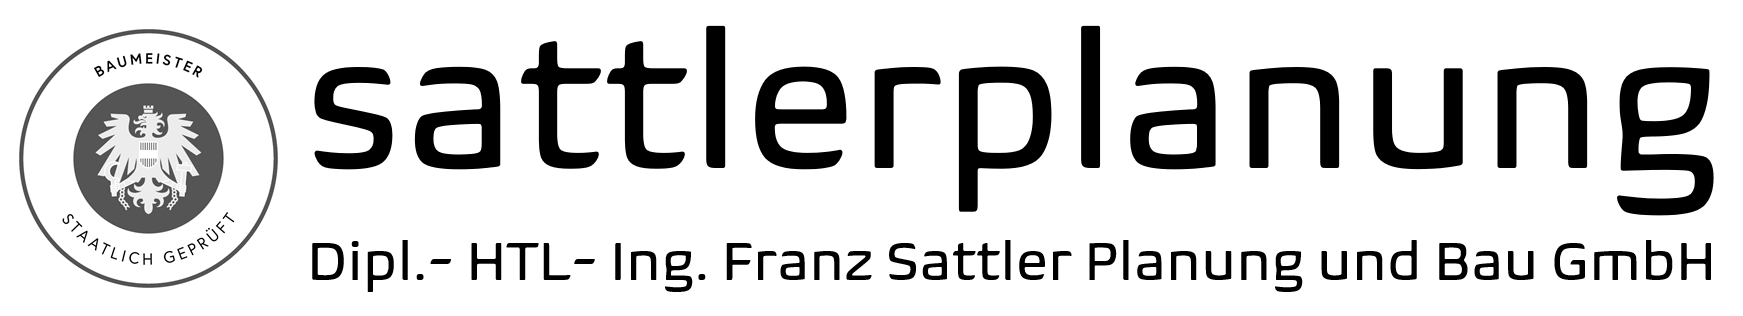 DIPL-HTL-ING- F. Sattler Planung und Bau GmbH